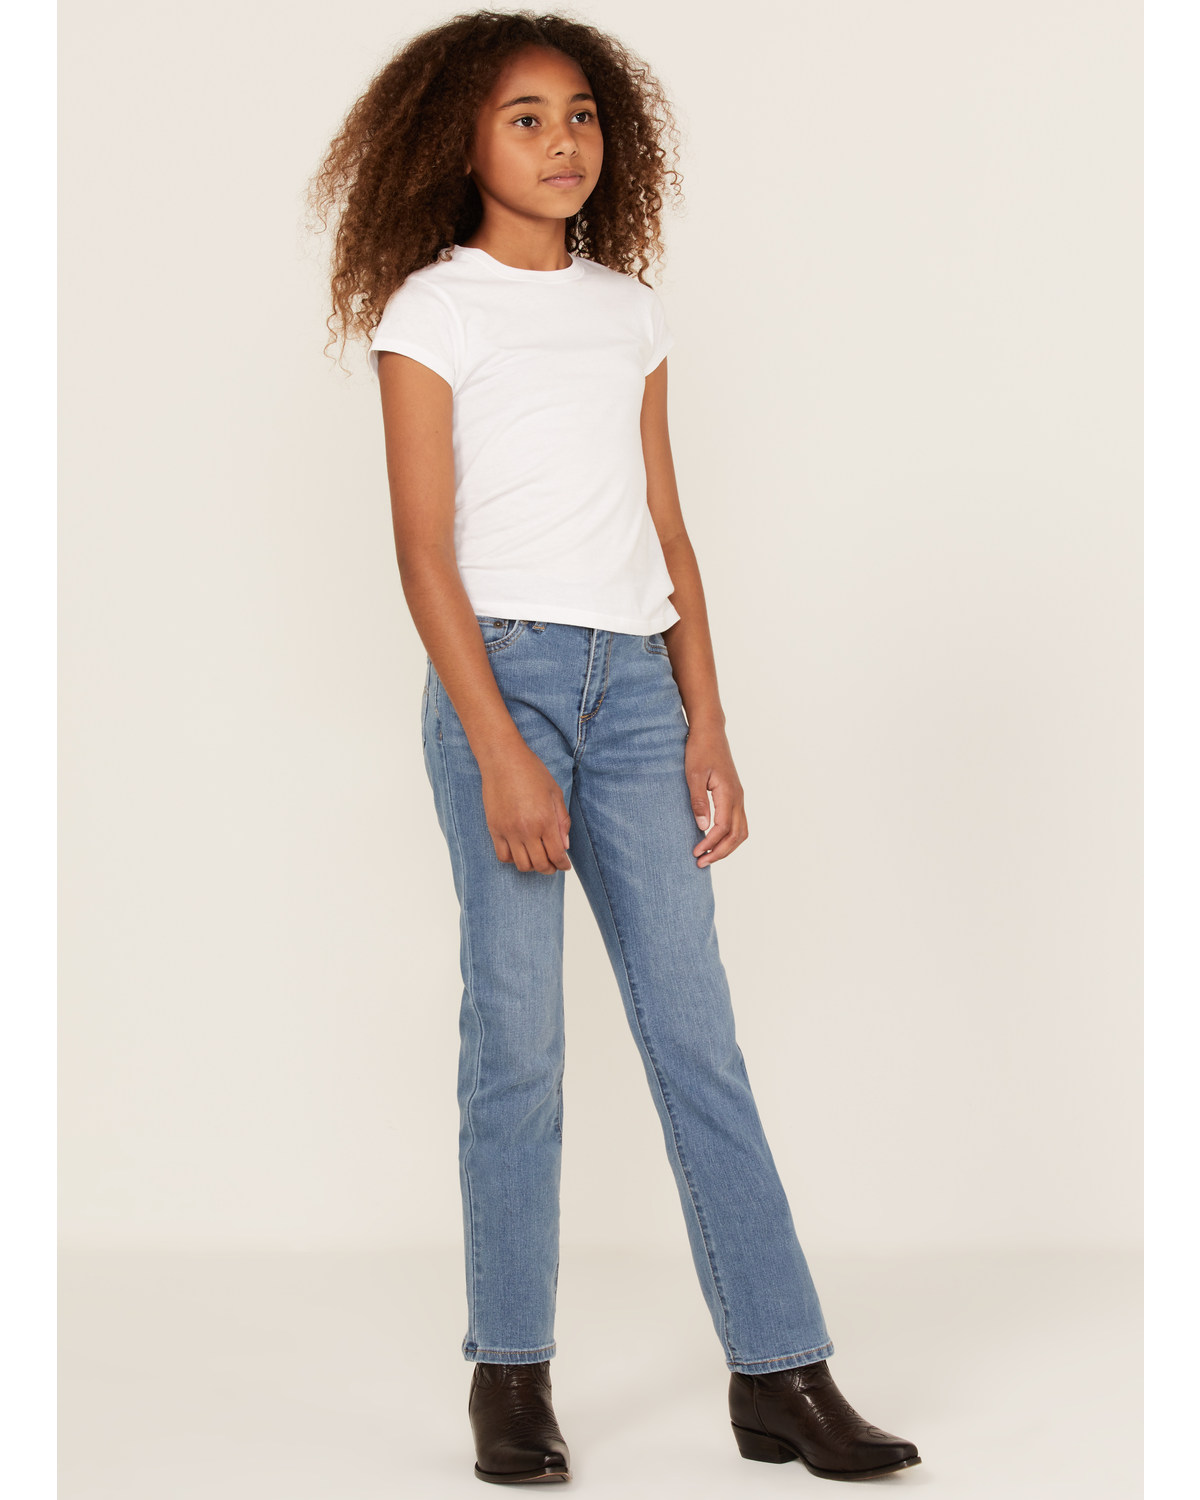 Levi's Little Girls' Lapis Sights Bootcut Jeans